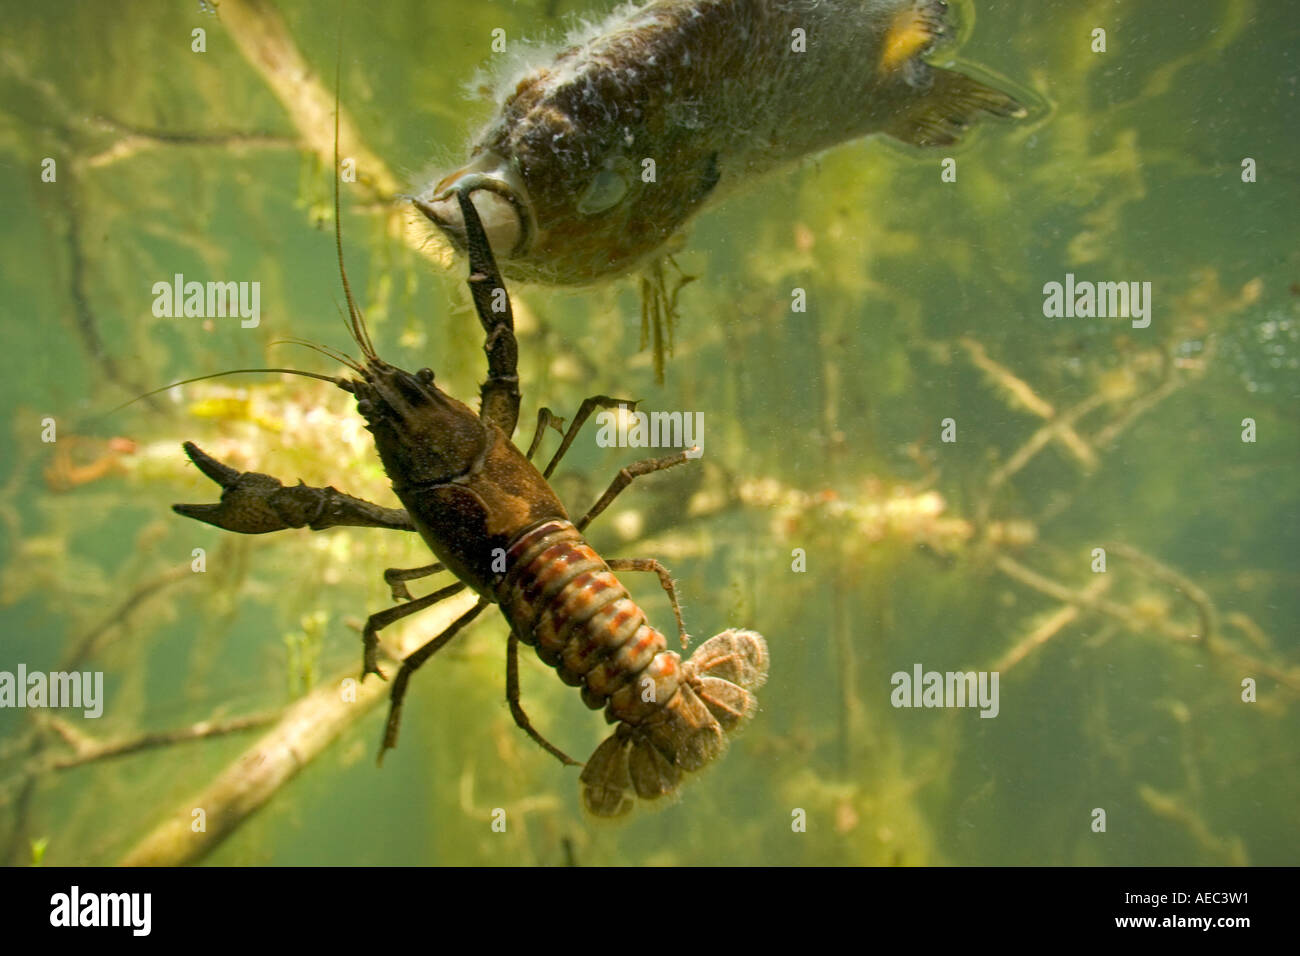 A spinycheek crayfish feeding on a Pumpkinseed body (France). Ecrevisse américaine se nourrissant du cadavre d'une perche soleil Stock Photo